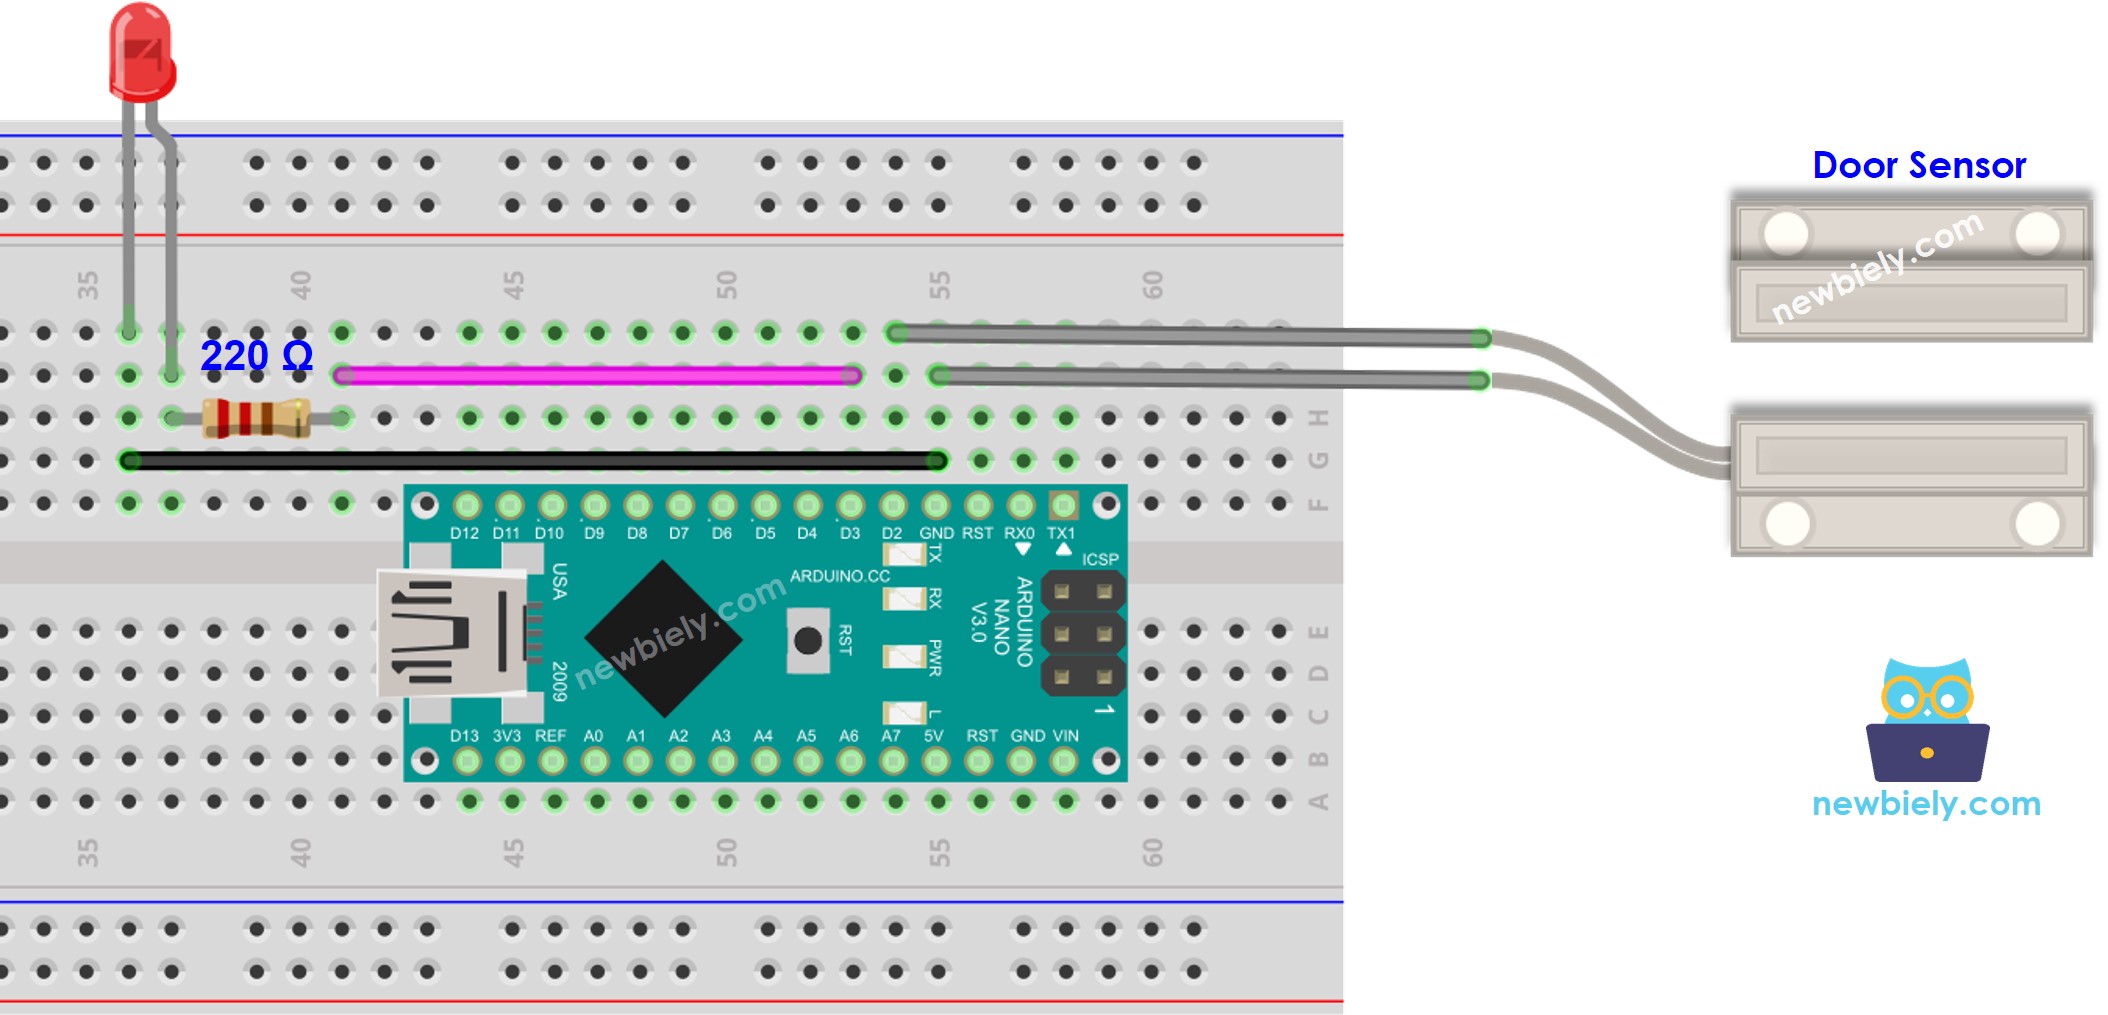 The wiring diagram between Arduino Nano and door sensor LED